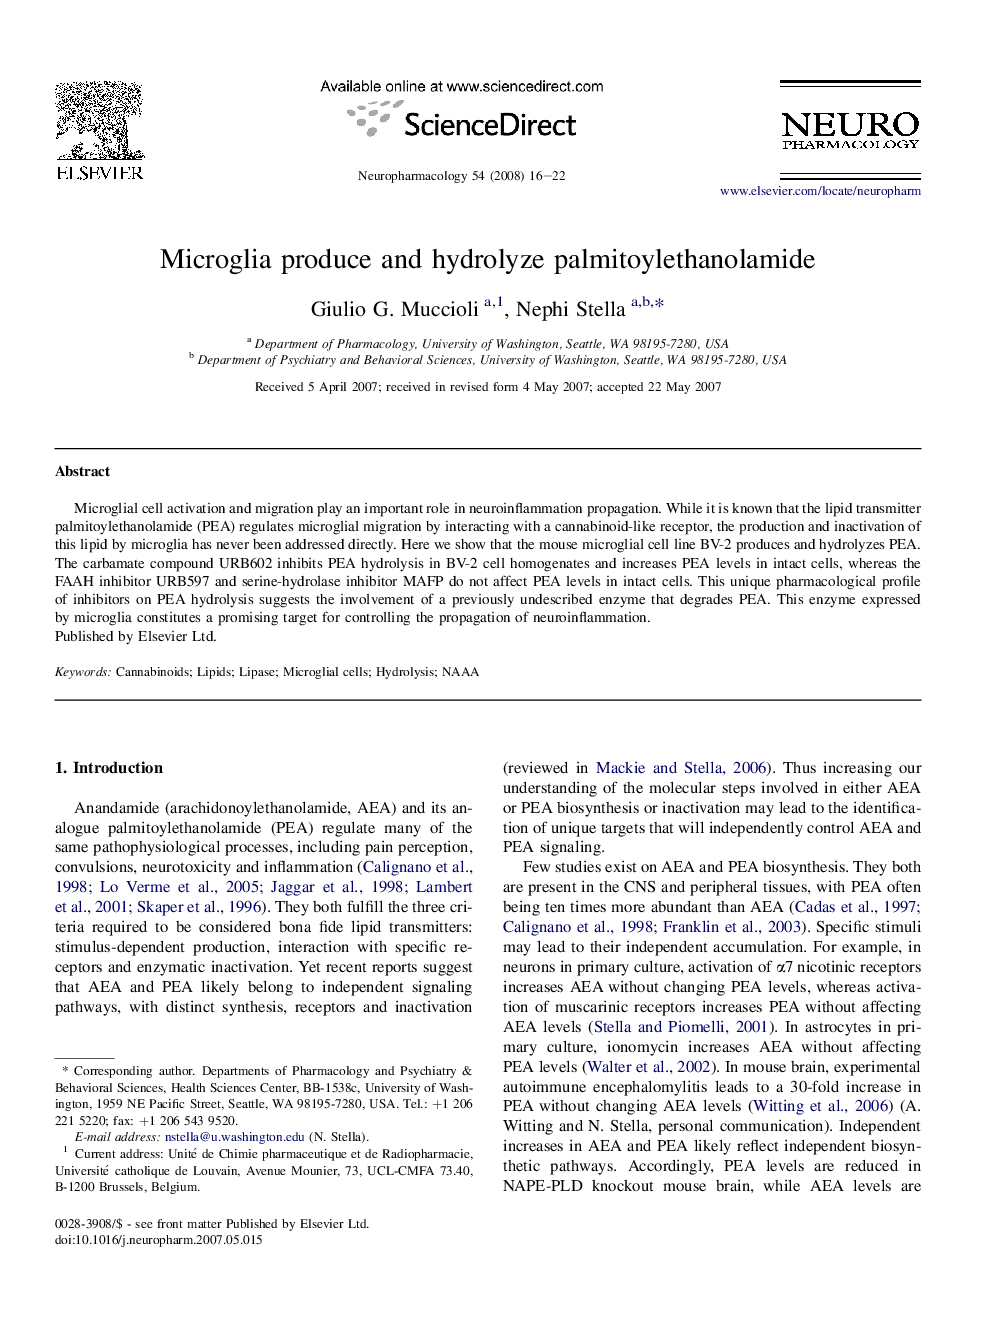 Microglia produce and hydrolyze palmitoylethanolamide